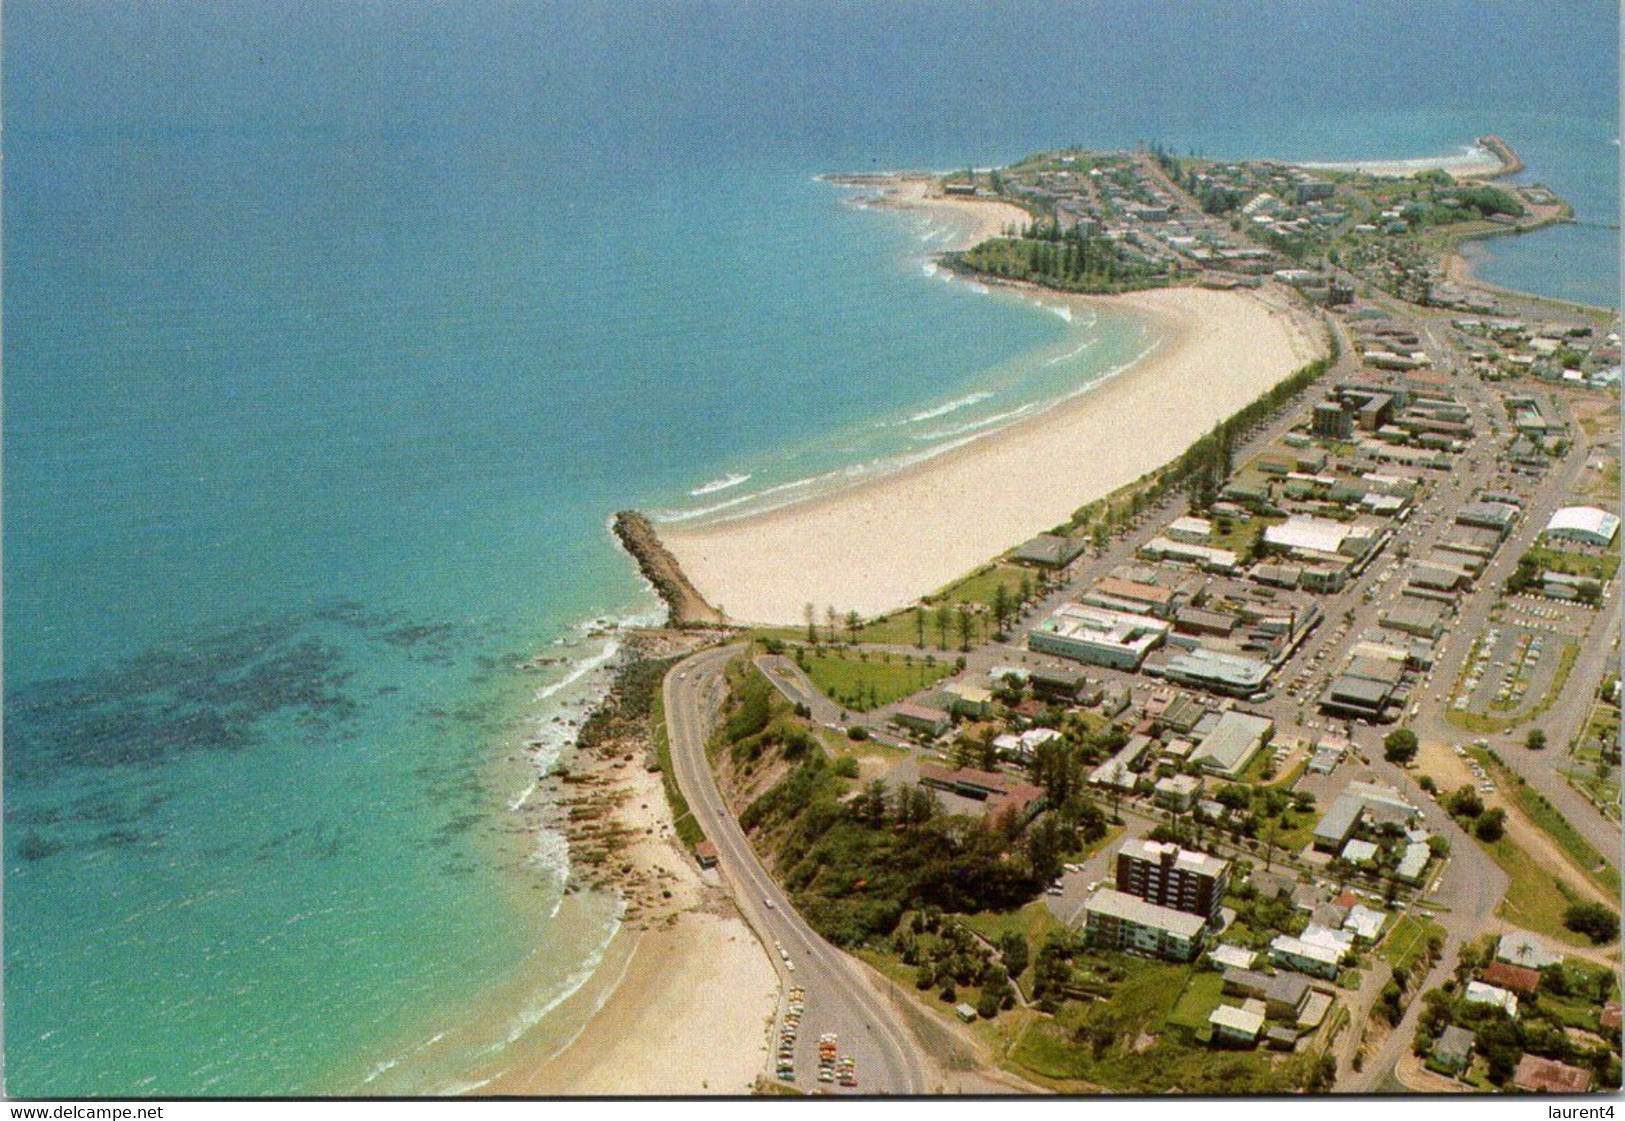 (5 H 51) Australia Post Pre-Paid 18 Cent Postcards - 2 Postcards - Queensland - Coolangatta - Gold Coast